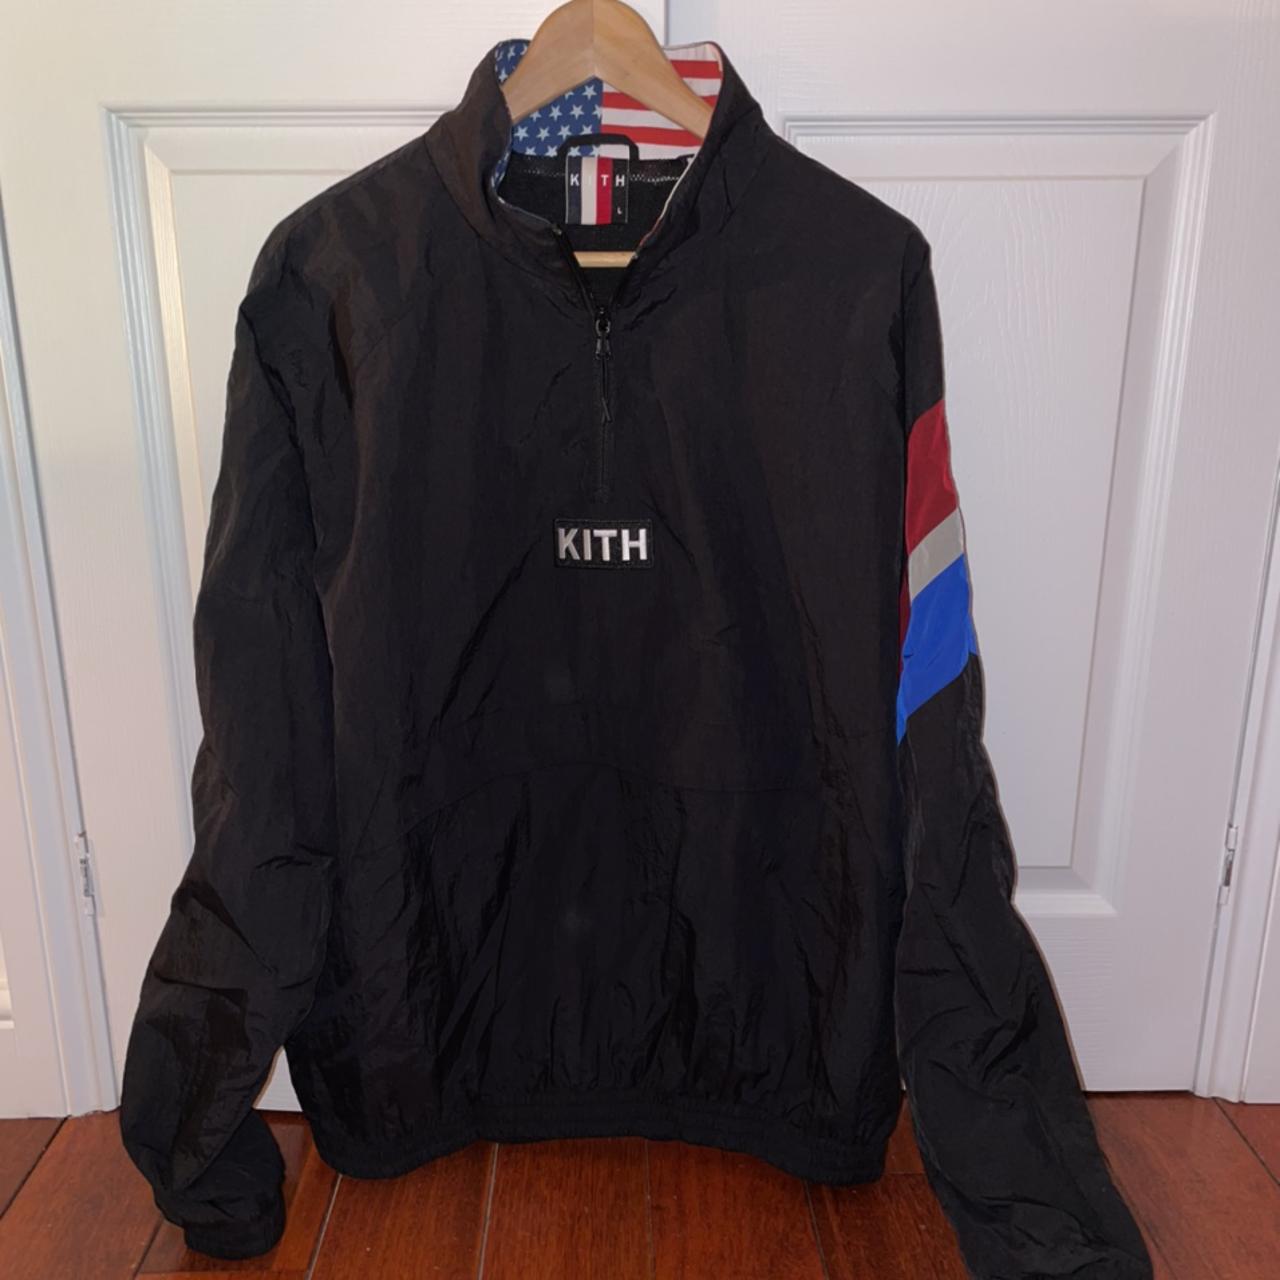 Kith USA Olympic Team Track Jacket, Men’s size Large...